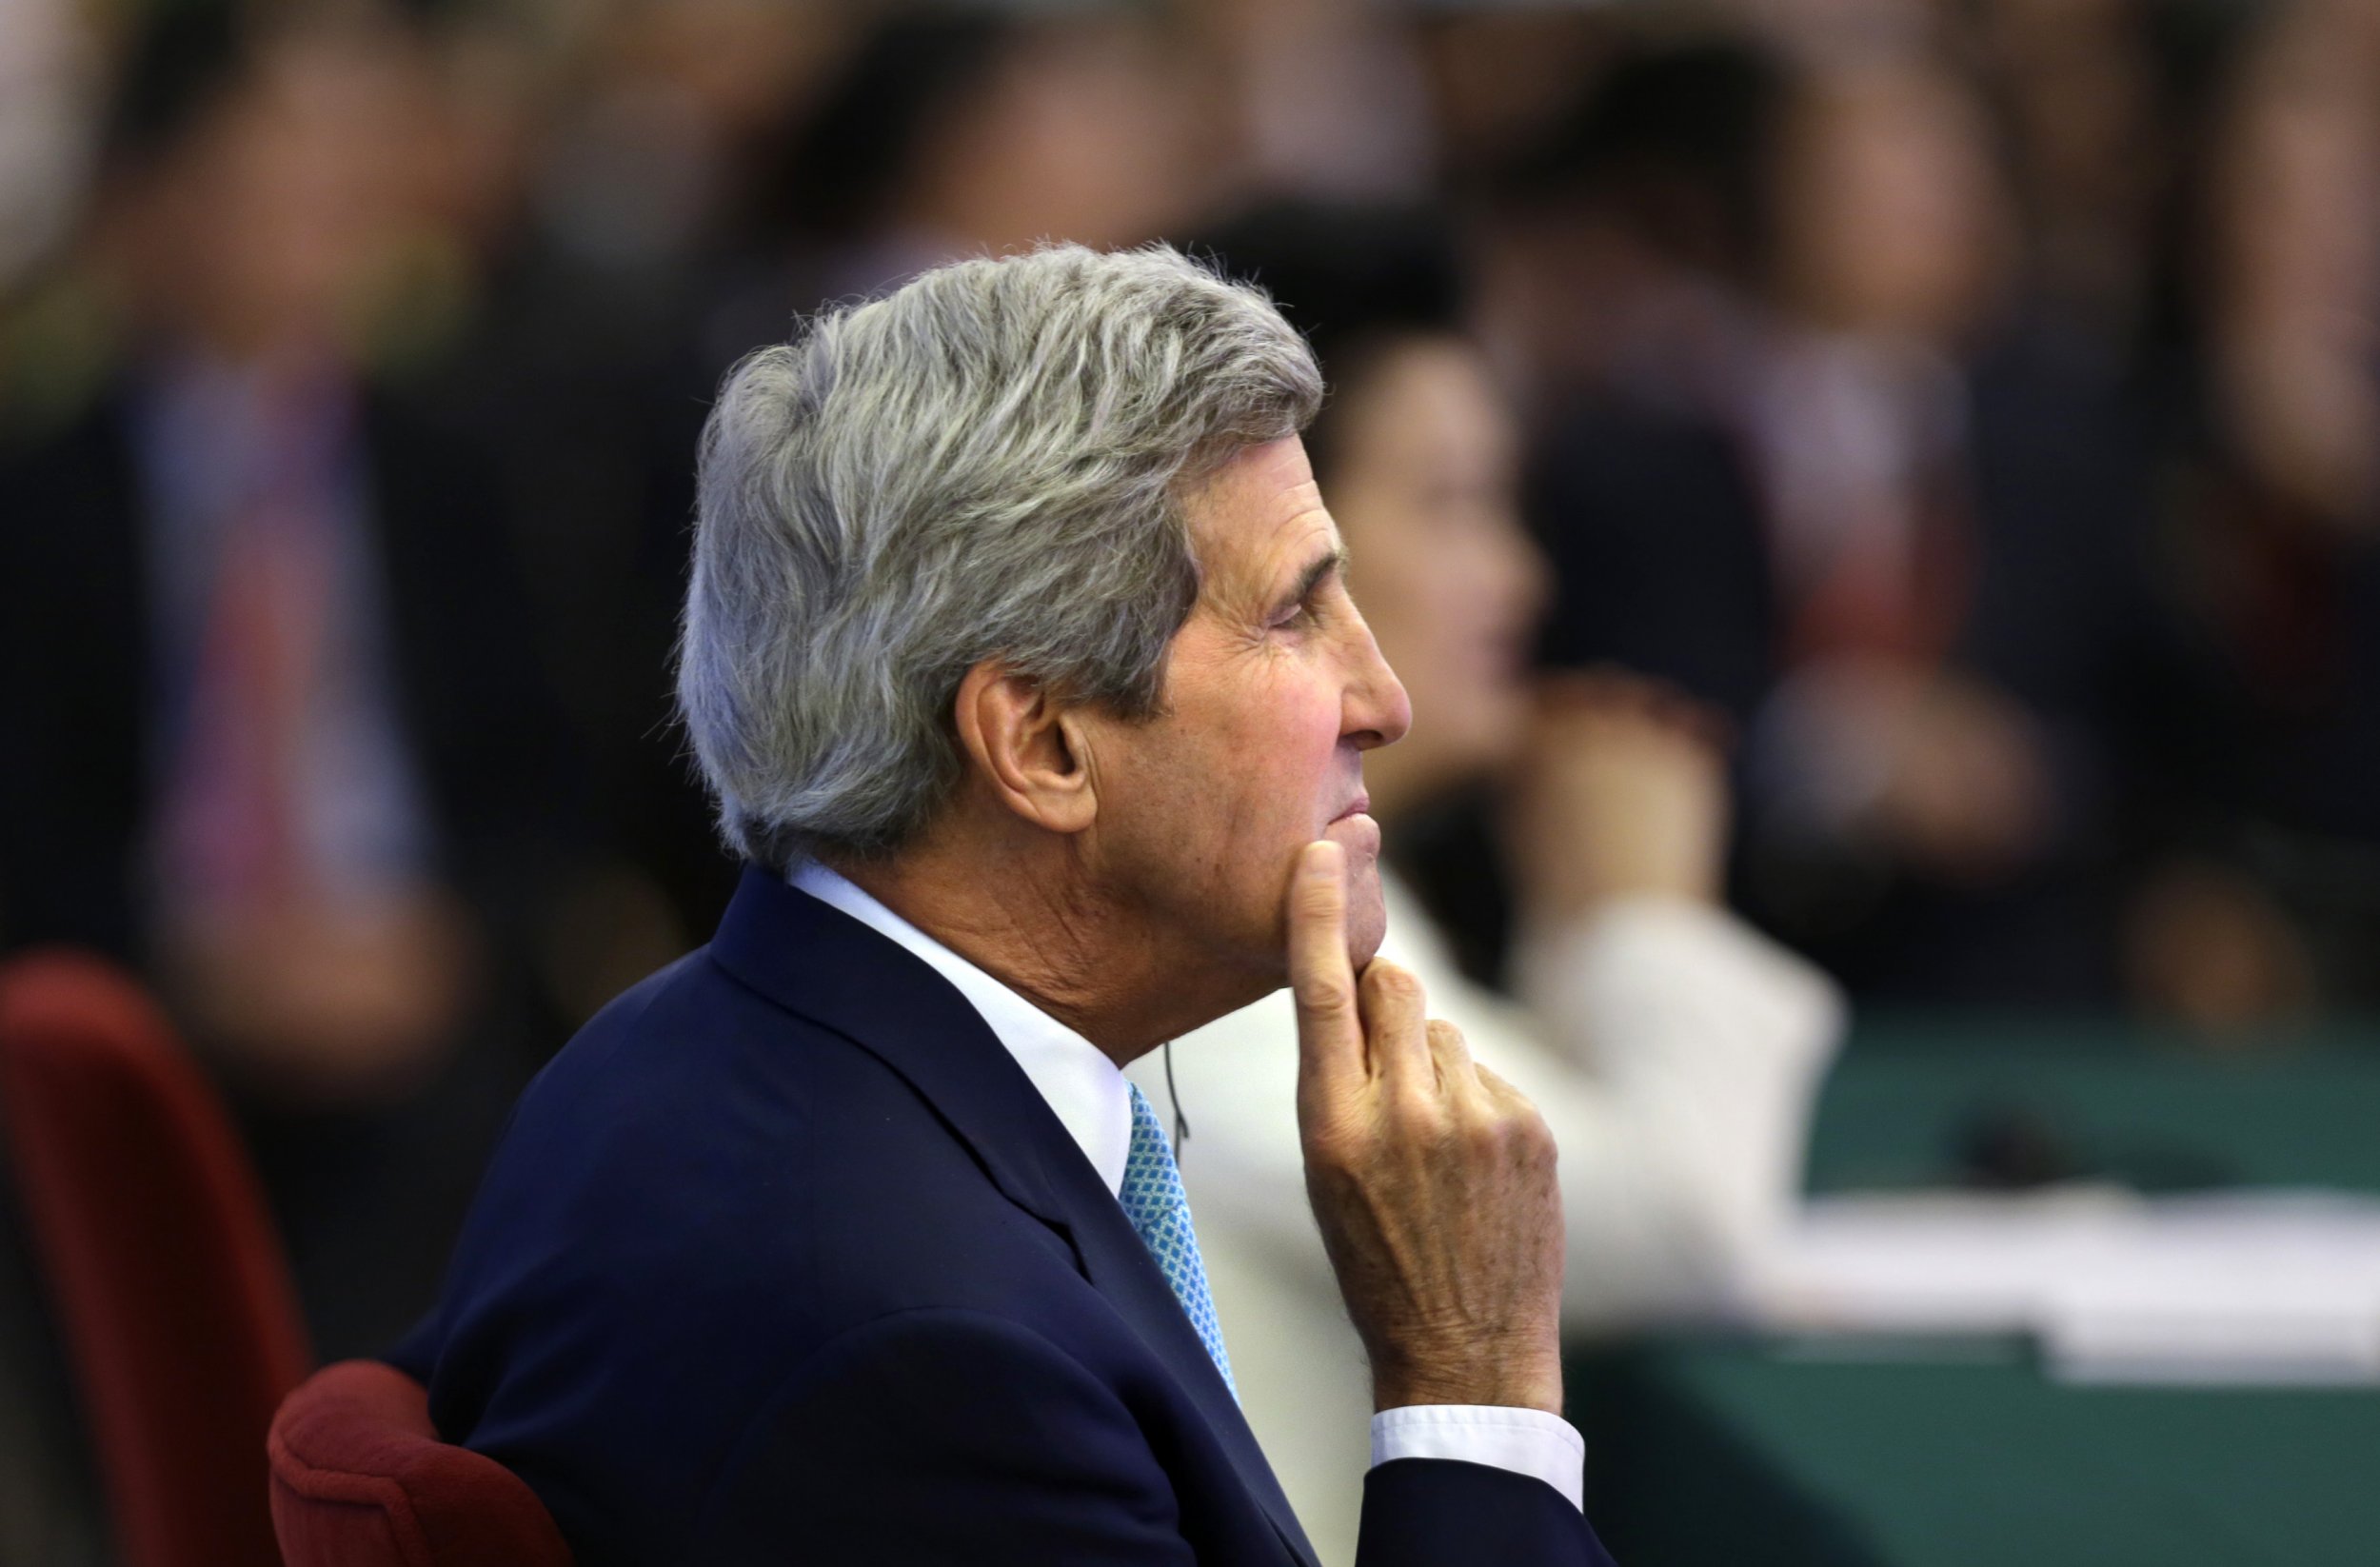 John Kerry in China